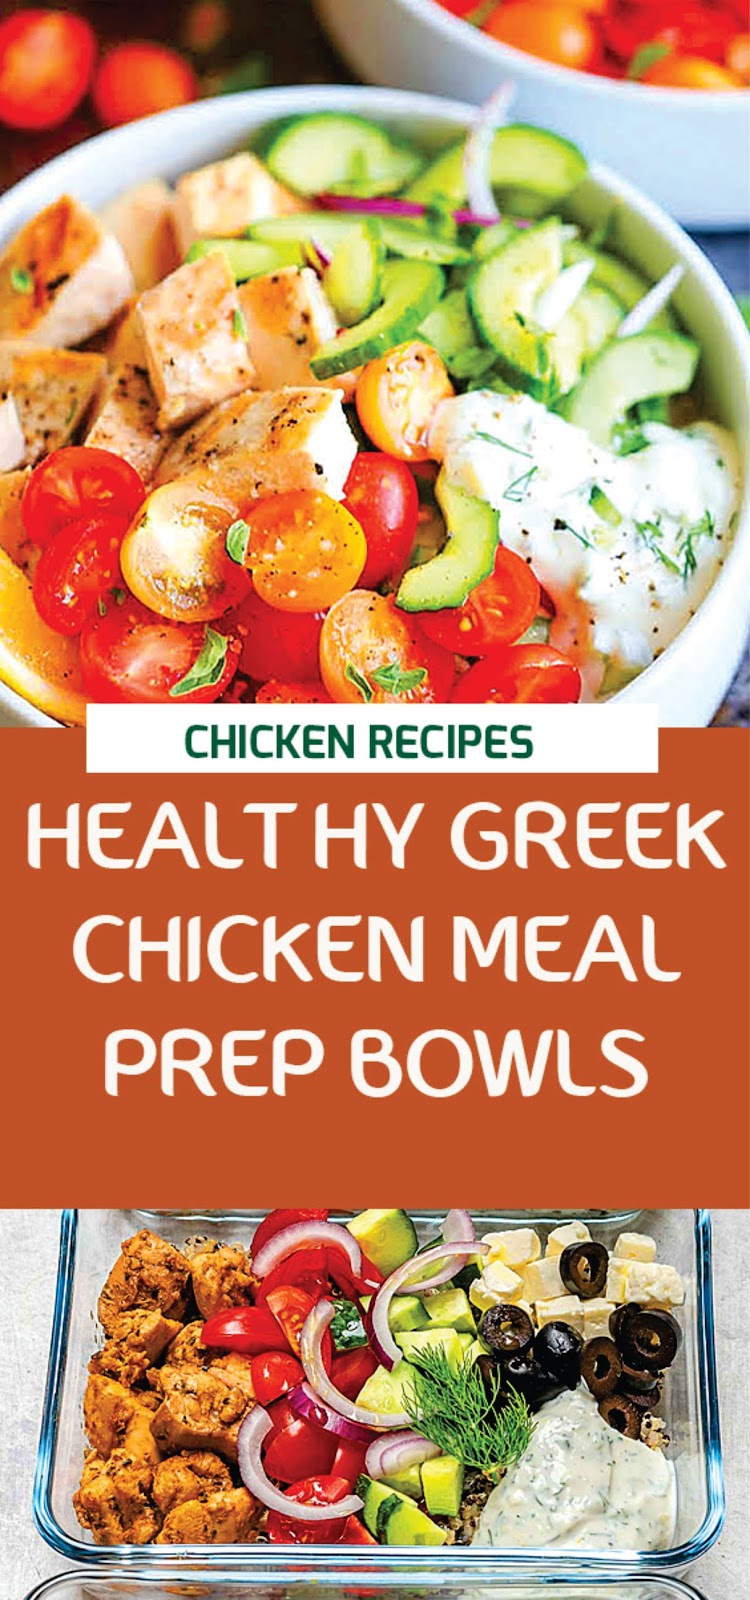 HEALTHY GREEK CHICKEN MEAL PREP BOWLS